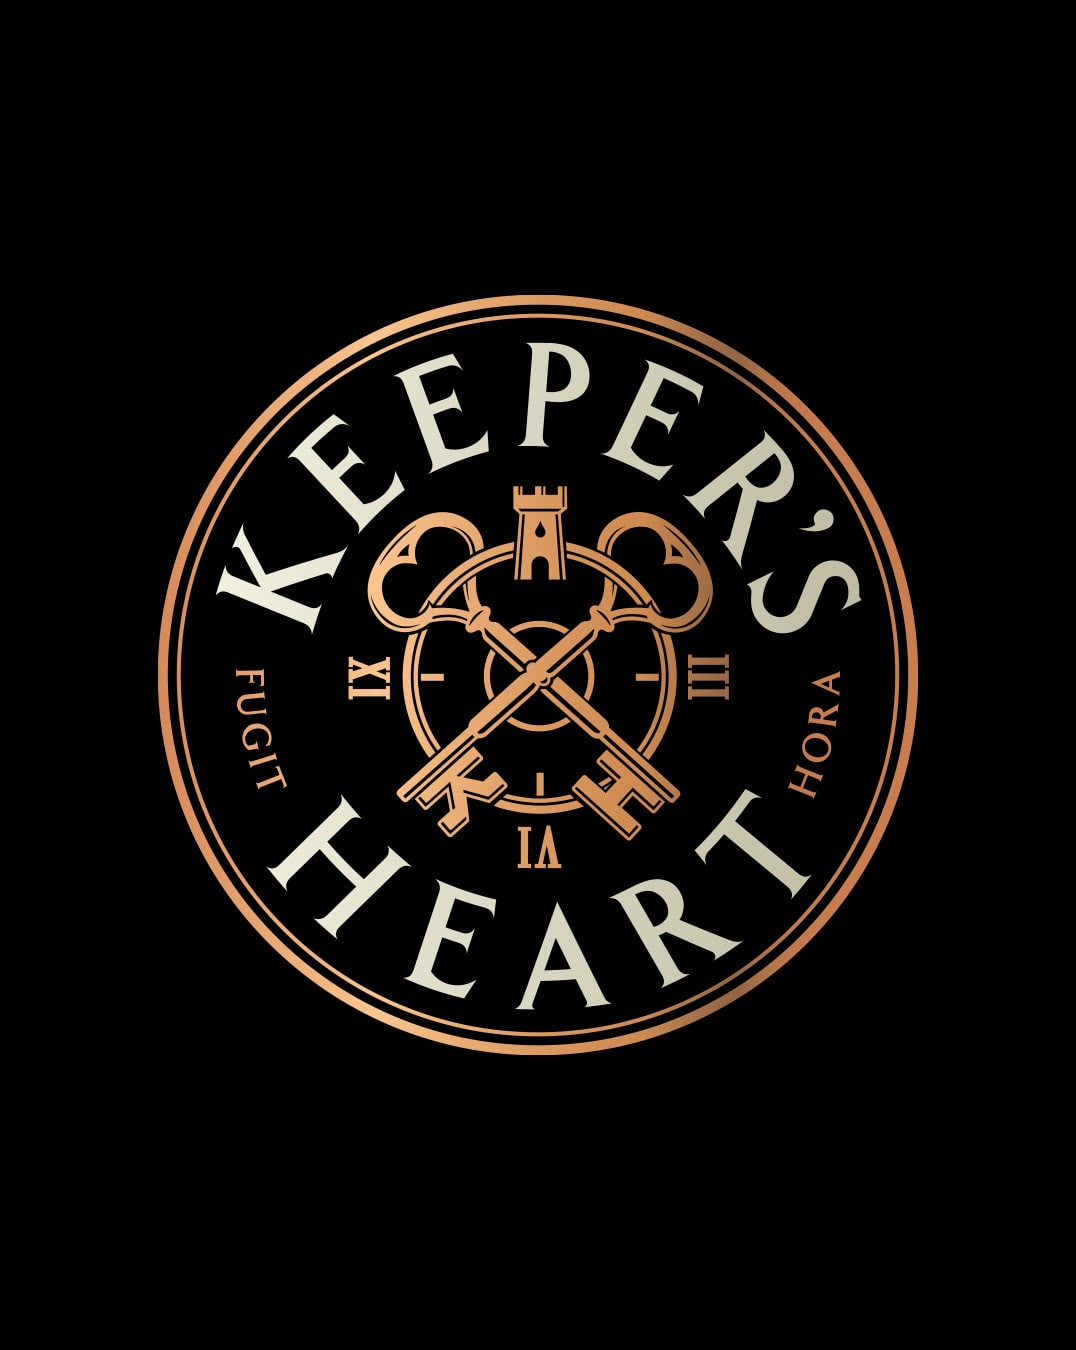 Keeper’s Heart whiskey logo design color